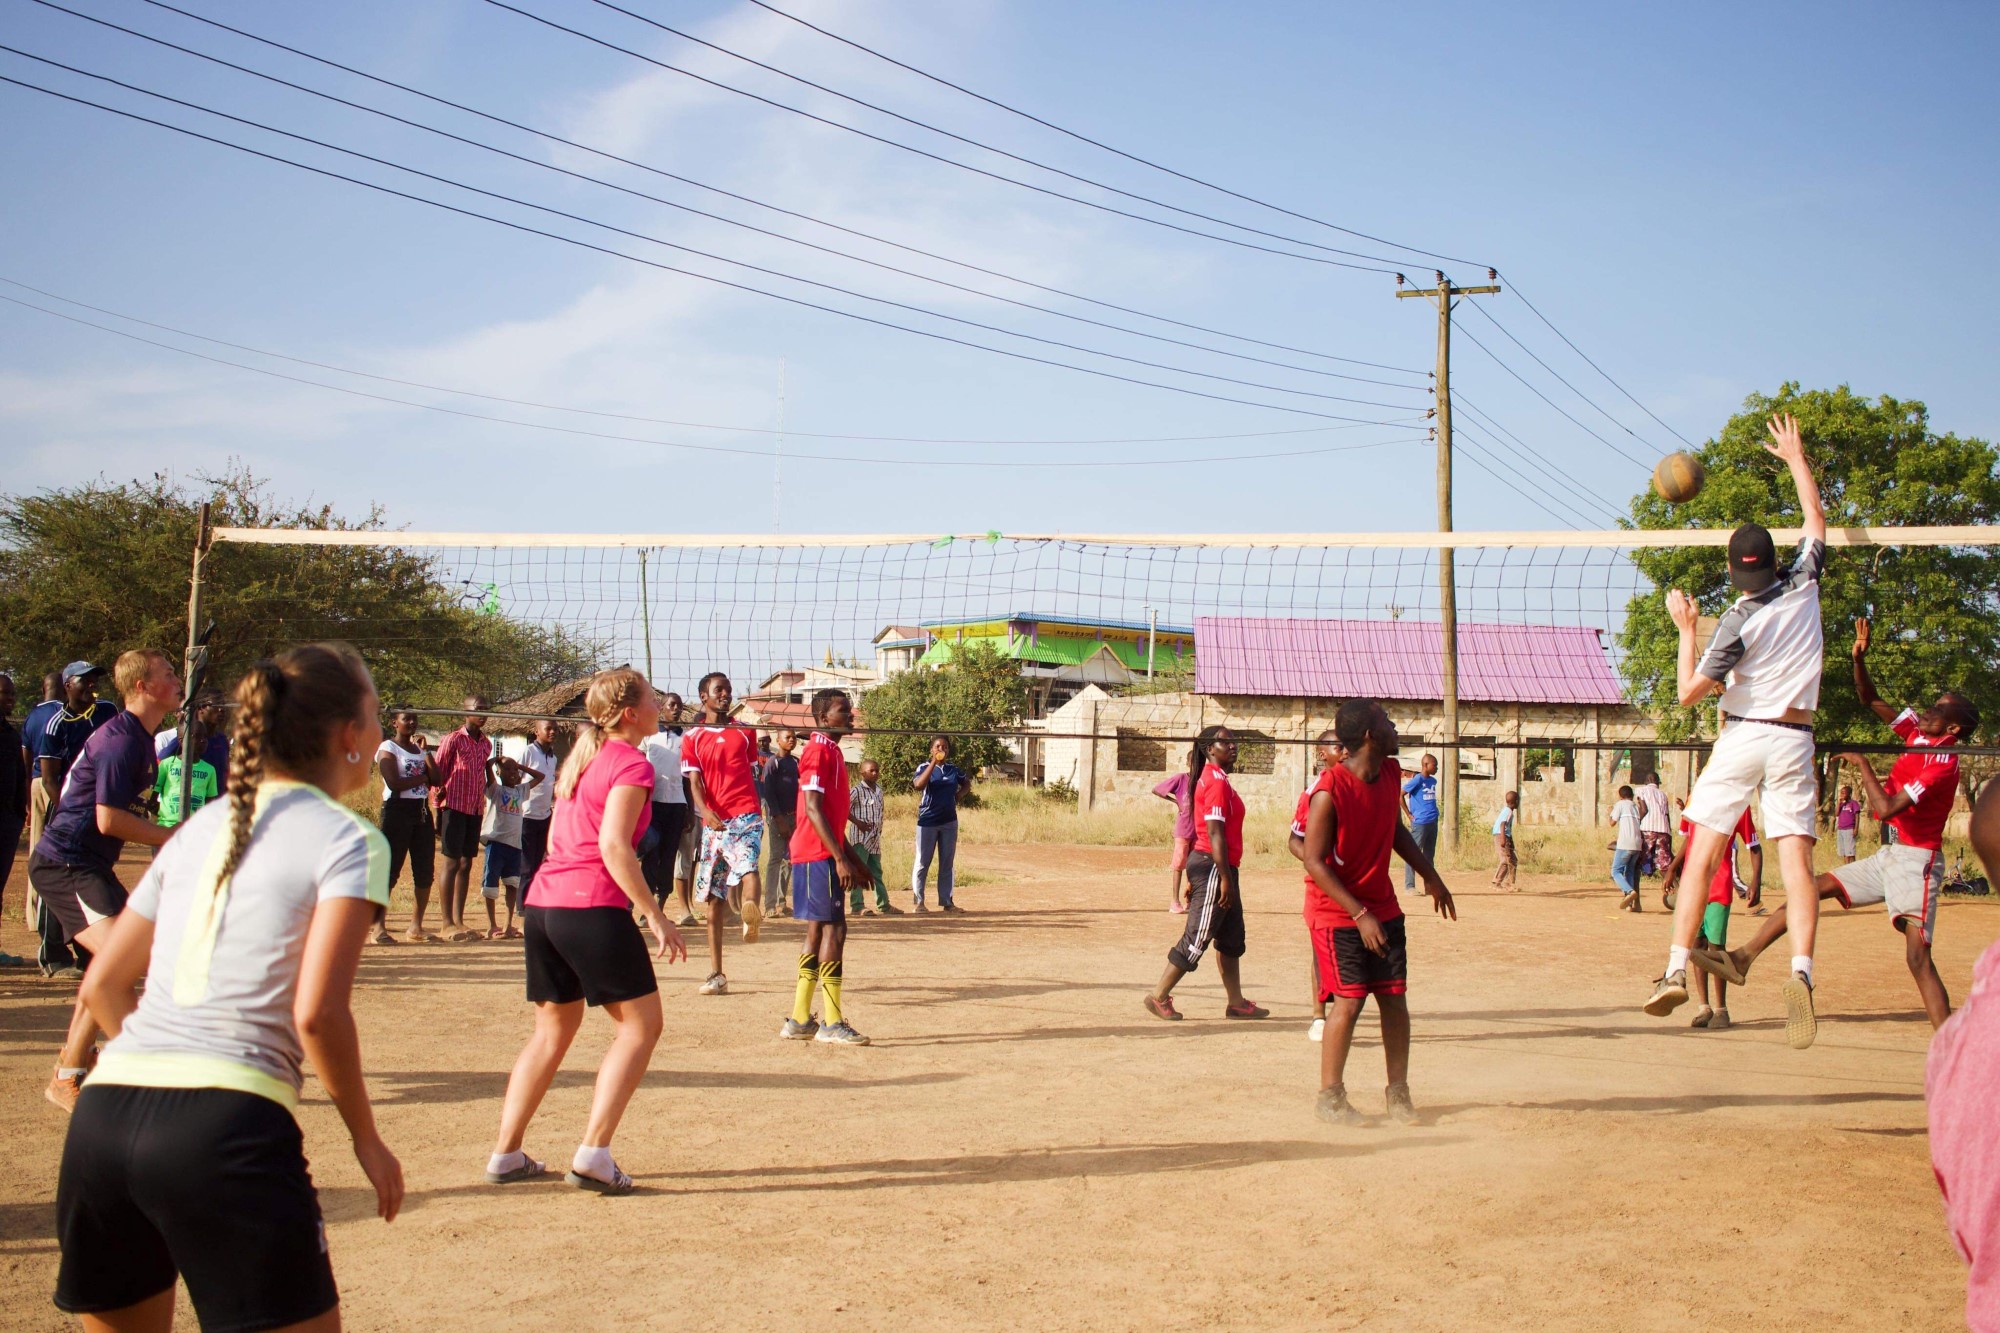 Volleyballkamp på landsbygda i Kenya.